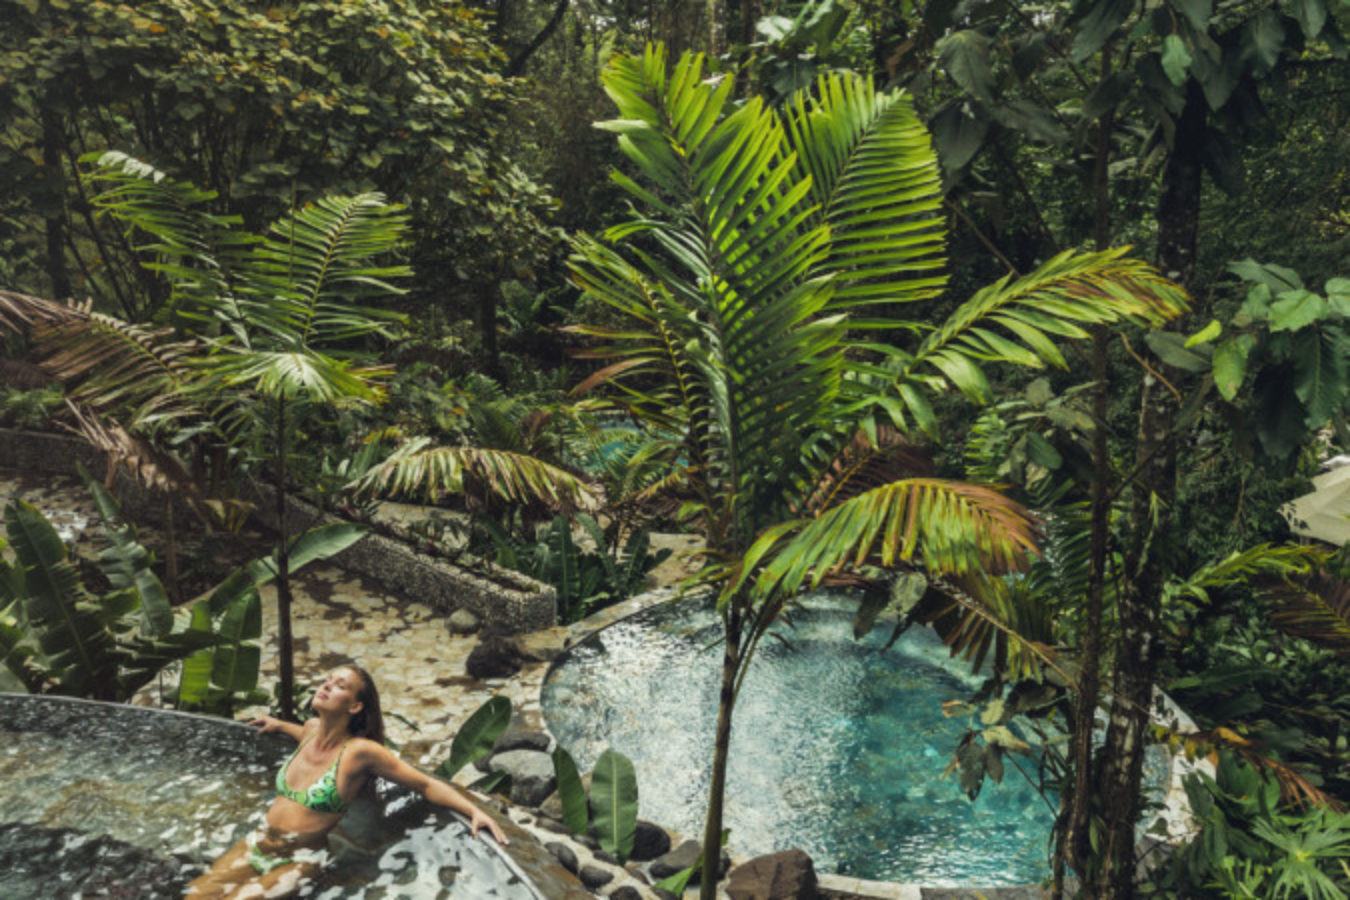 Review - Nayara - The Award-Winning Luxury Hot Spring Spa Hotel in Costa Rica